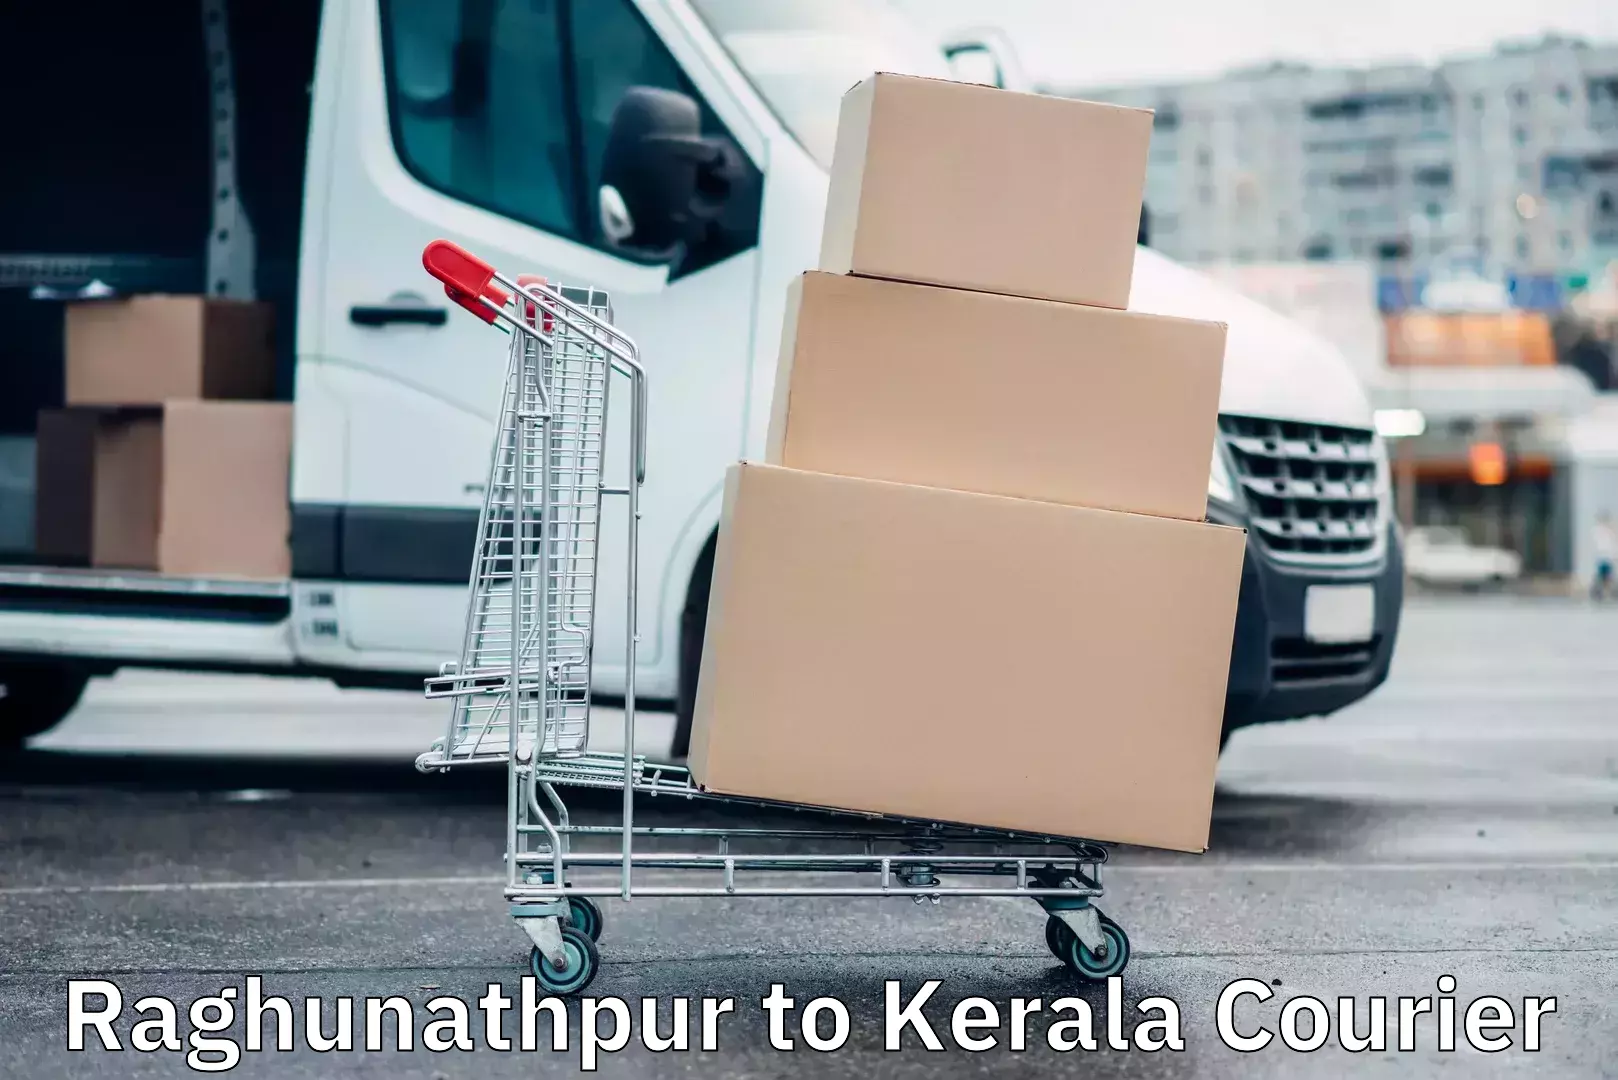 Doorstep delivery service Raghunathpur to Kerala